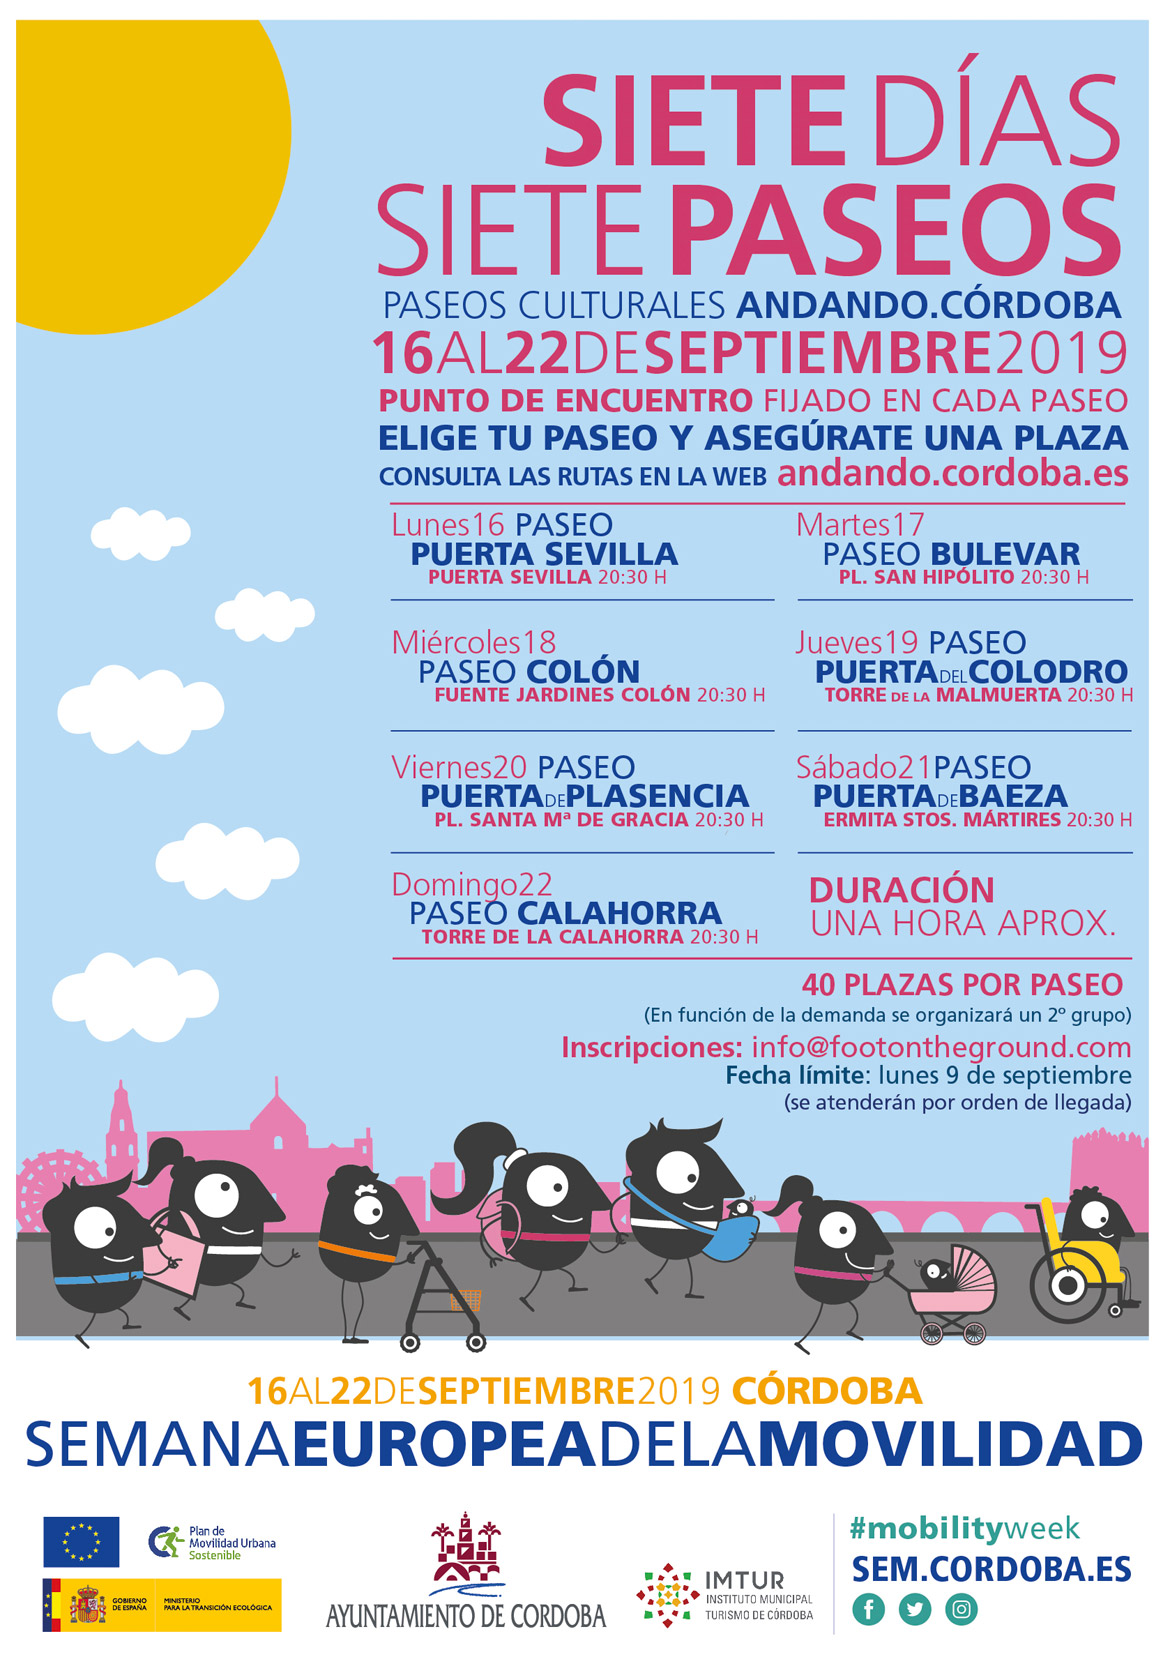 Siete Días, Siete Paseos - Semana Europea de la Movilidad 2019 en Córdoba (España)